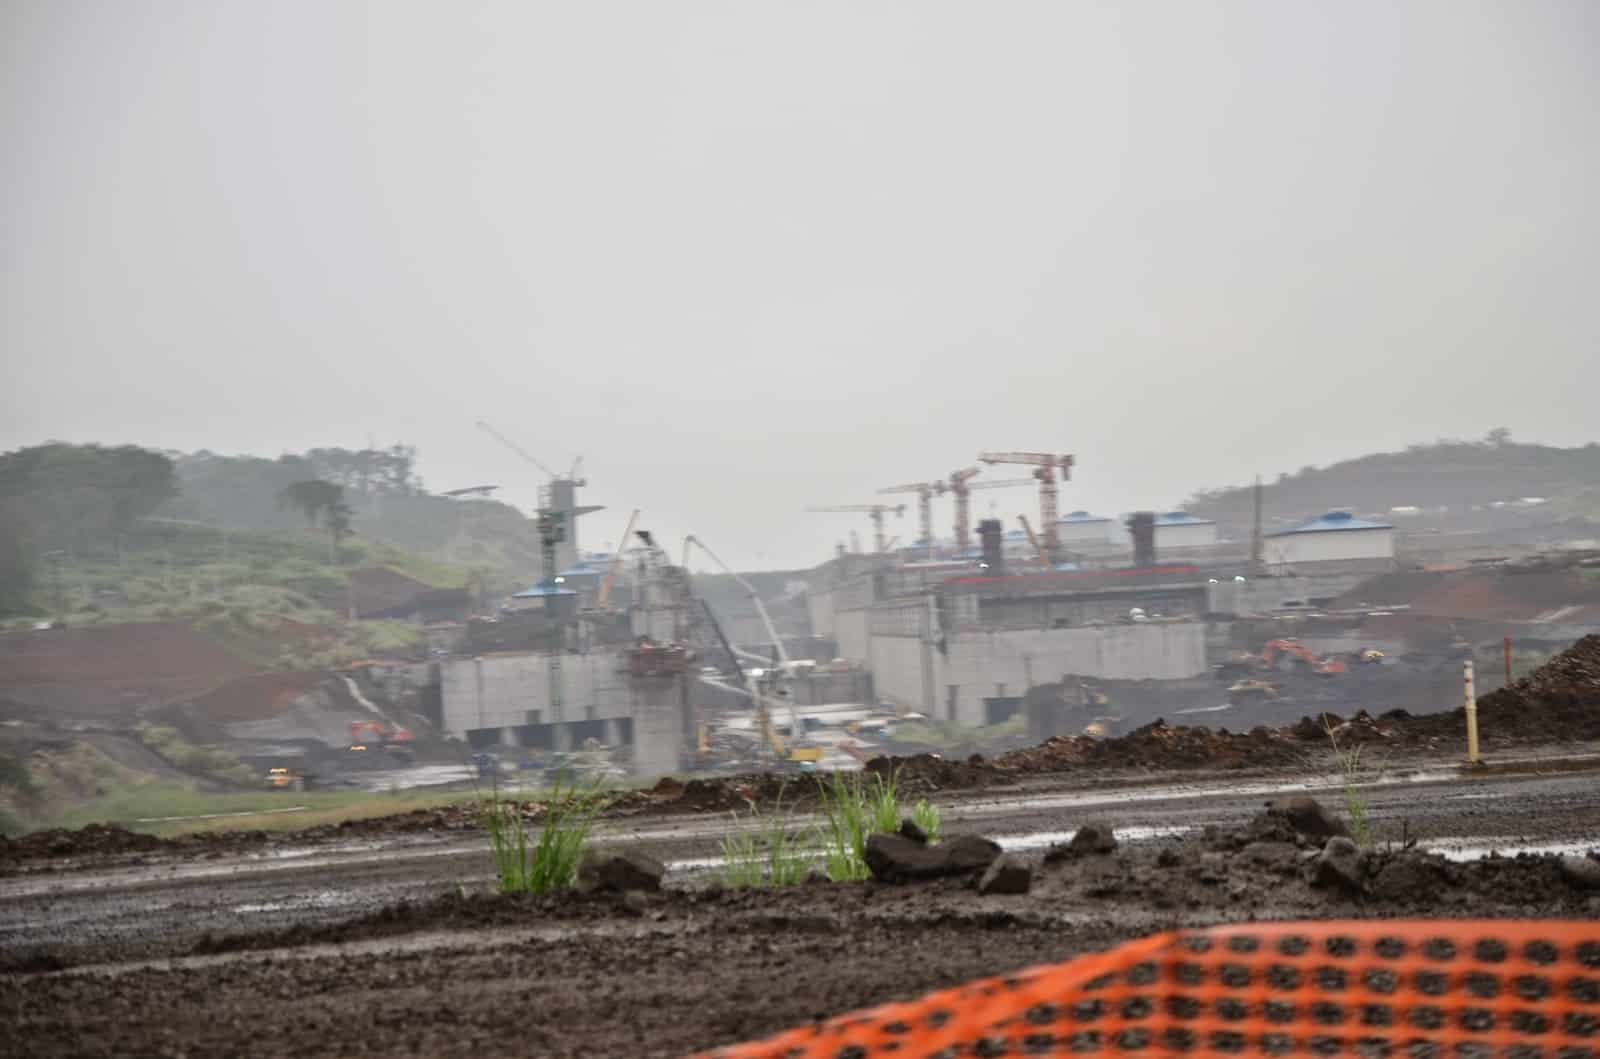 Panama Canal Expansion Project near the Gatún Locks